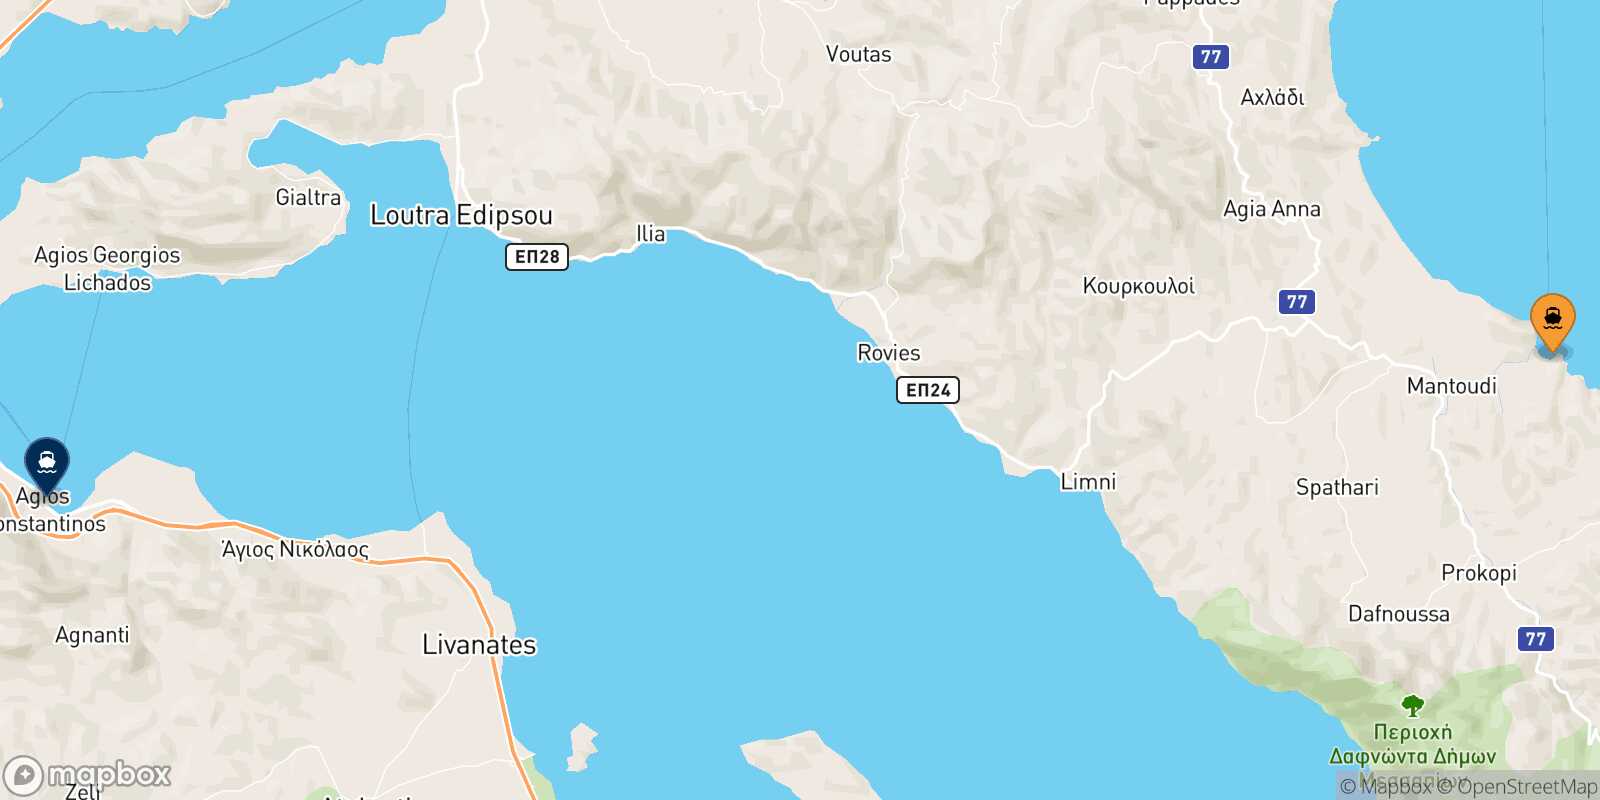 Mappa della rotta Mantoudi (Evia) Agios Konstantinos